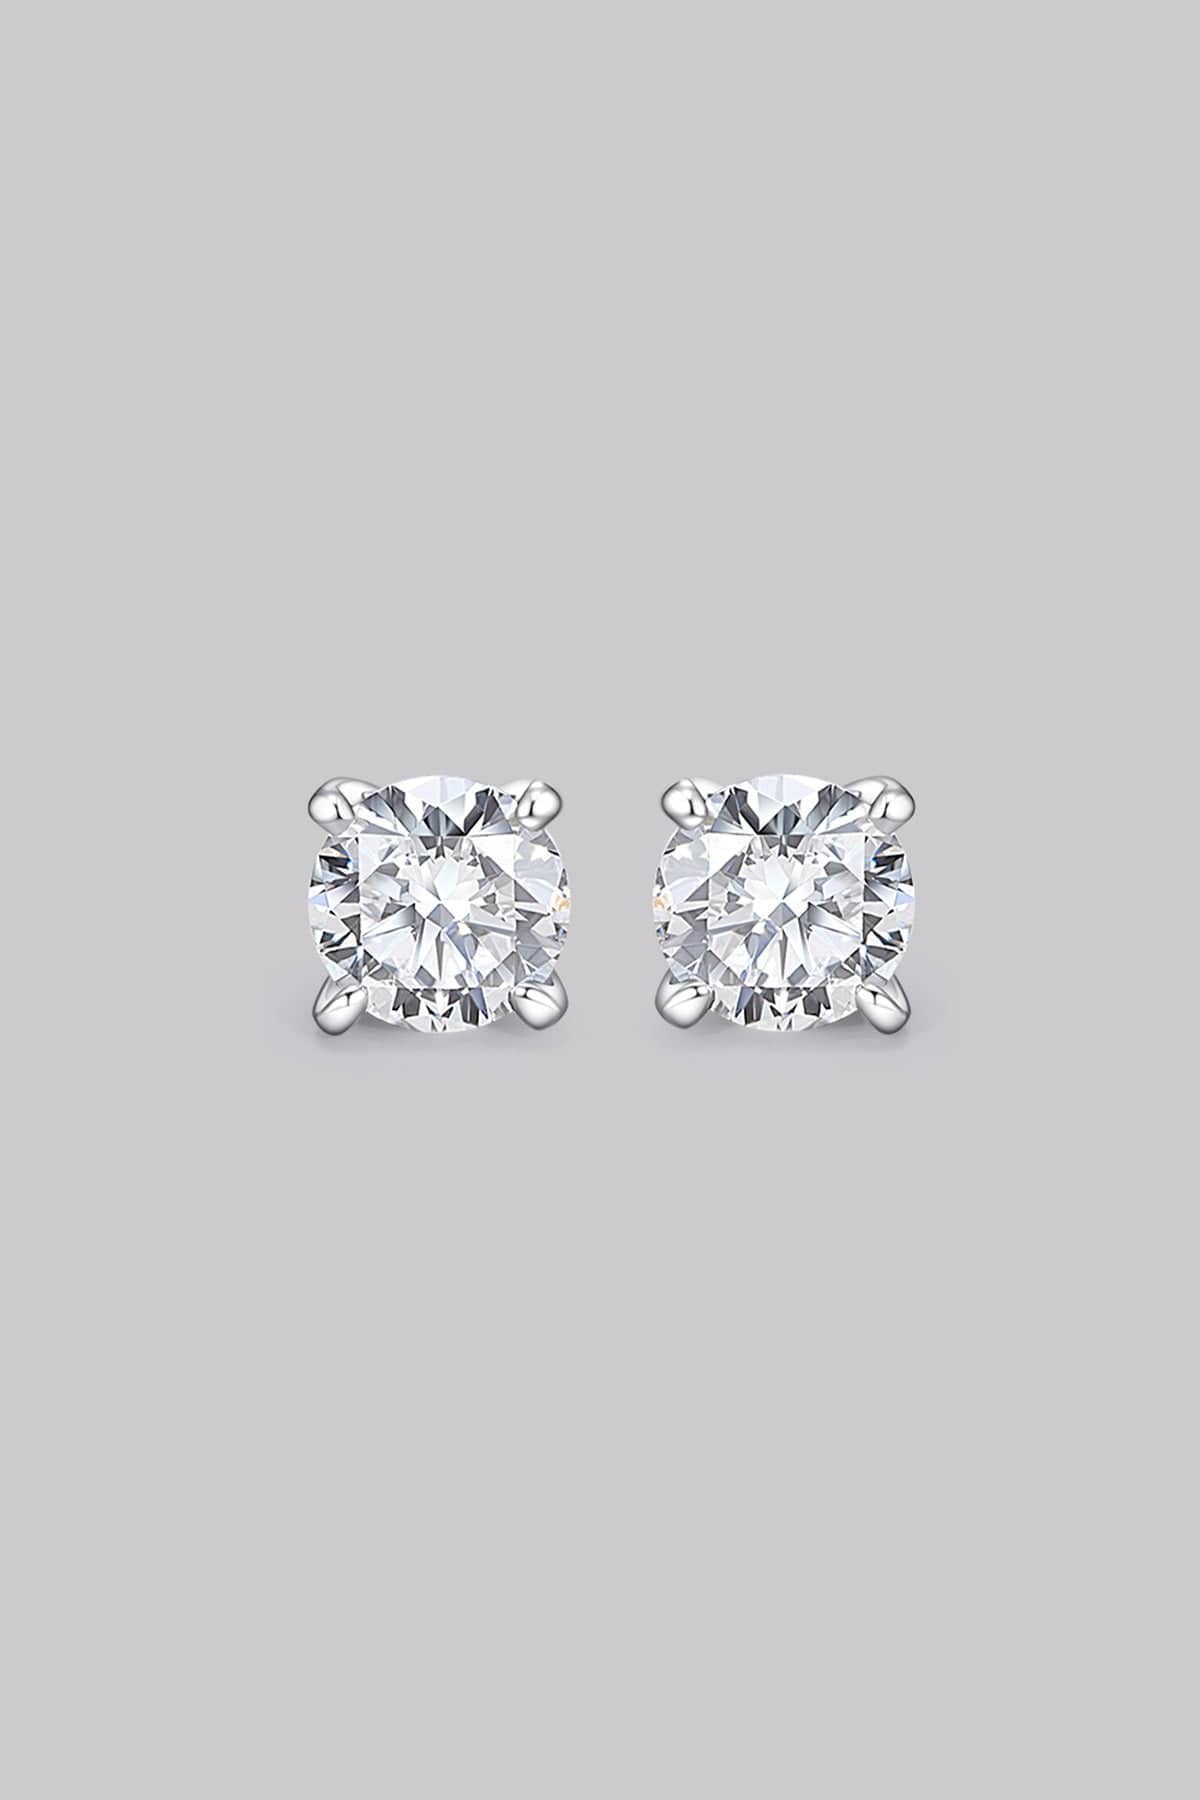 Round Diamond Stud Earrings (0.50ct) - APM Monaco